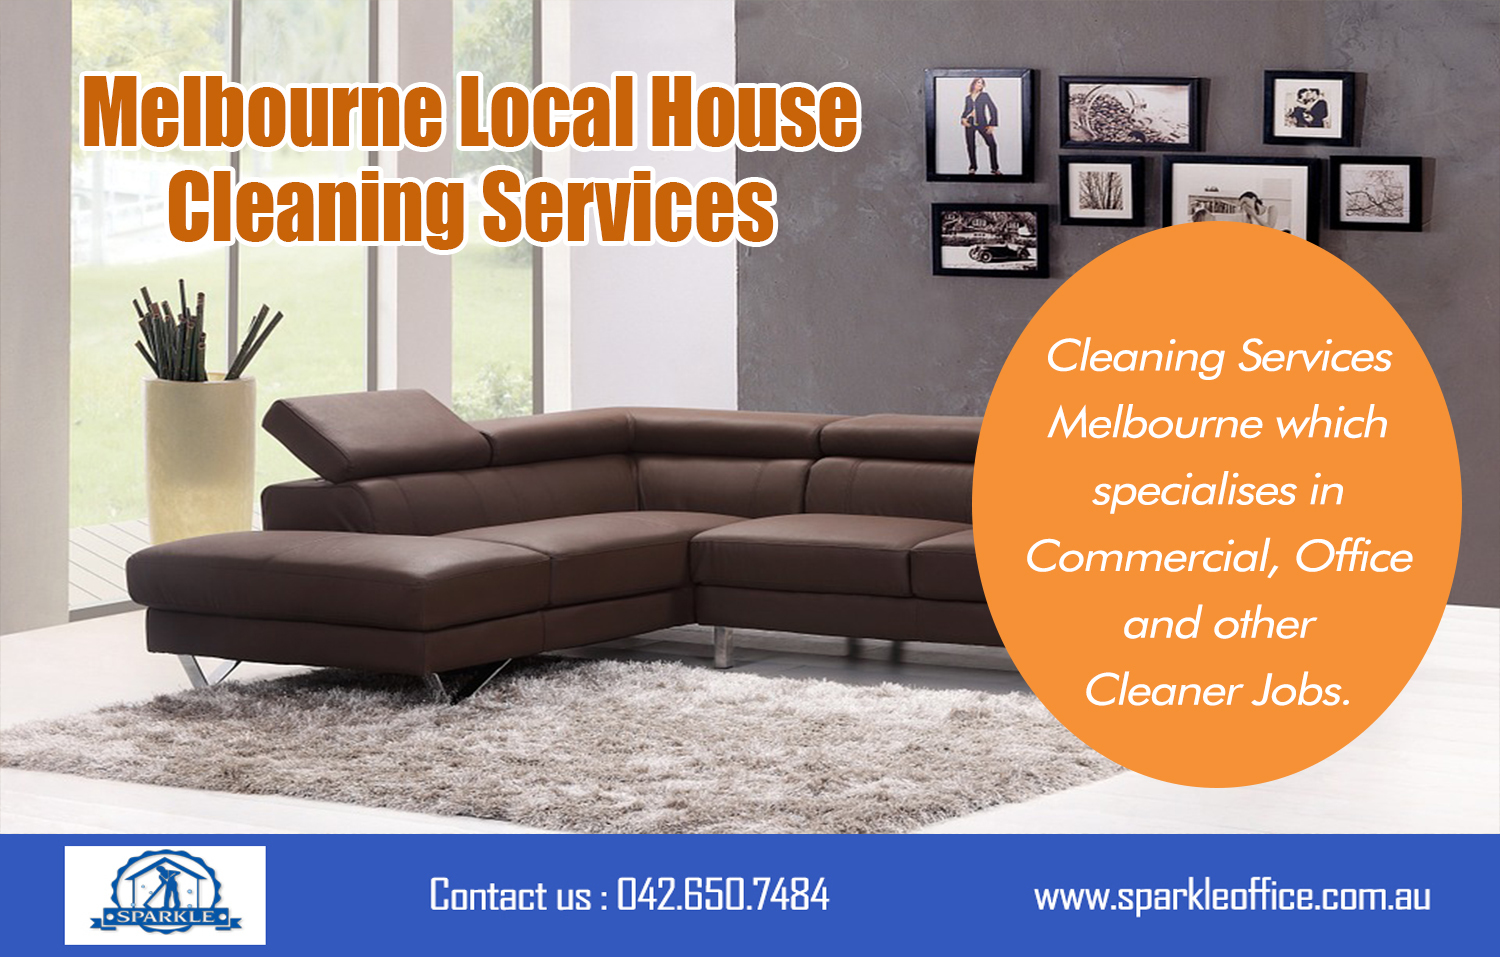 Melbourne Local House Cleaning Services| Call Us - 042 650 7484  | sparkleoffice.com.au